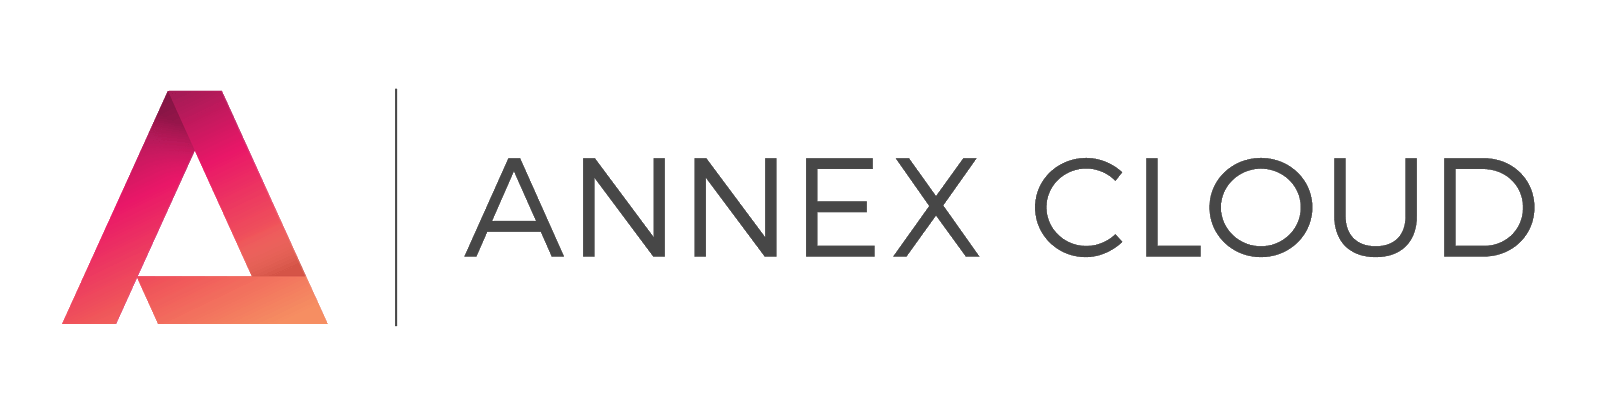 Annex Cloud Referral Marketing Software